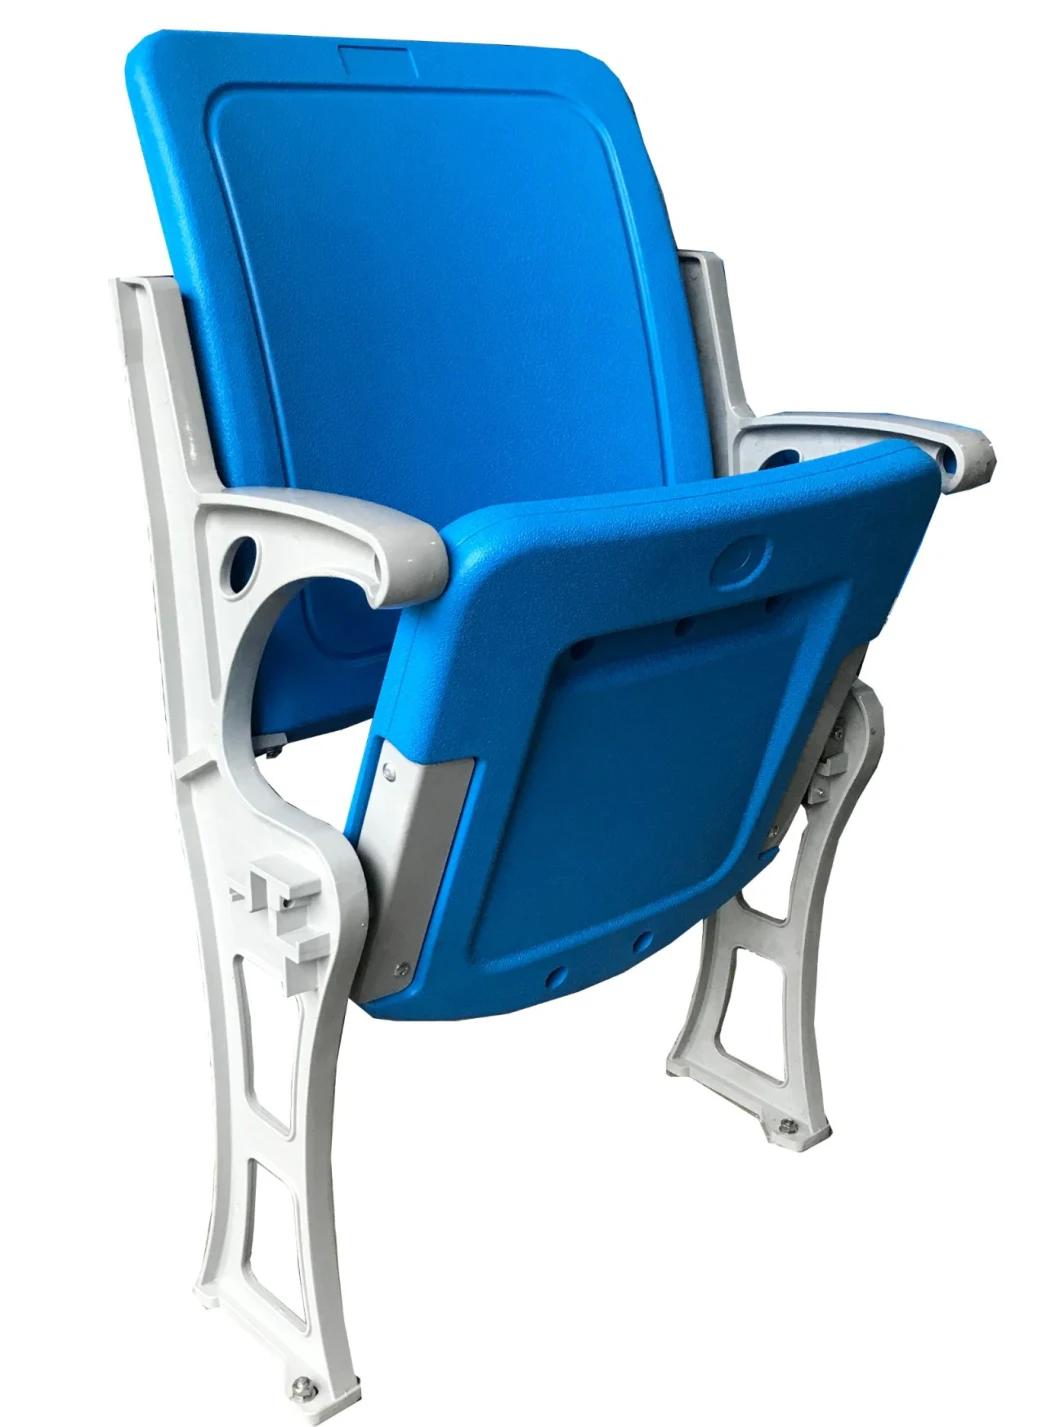 Floor Mounting Folding Stadium Chair Seats for Stadium, Arena, Gym, Halls, VIP Stadium Chair